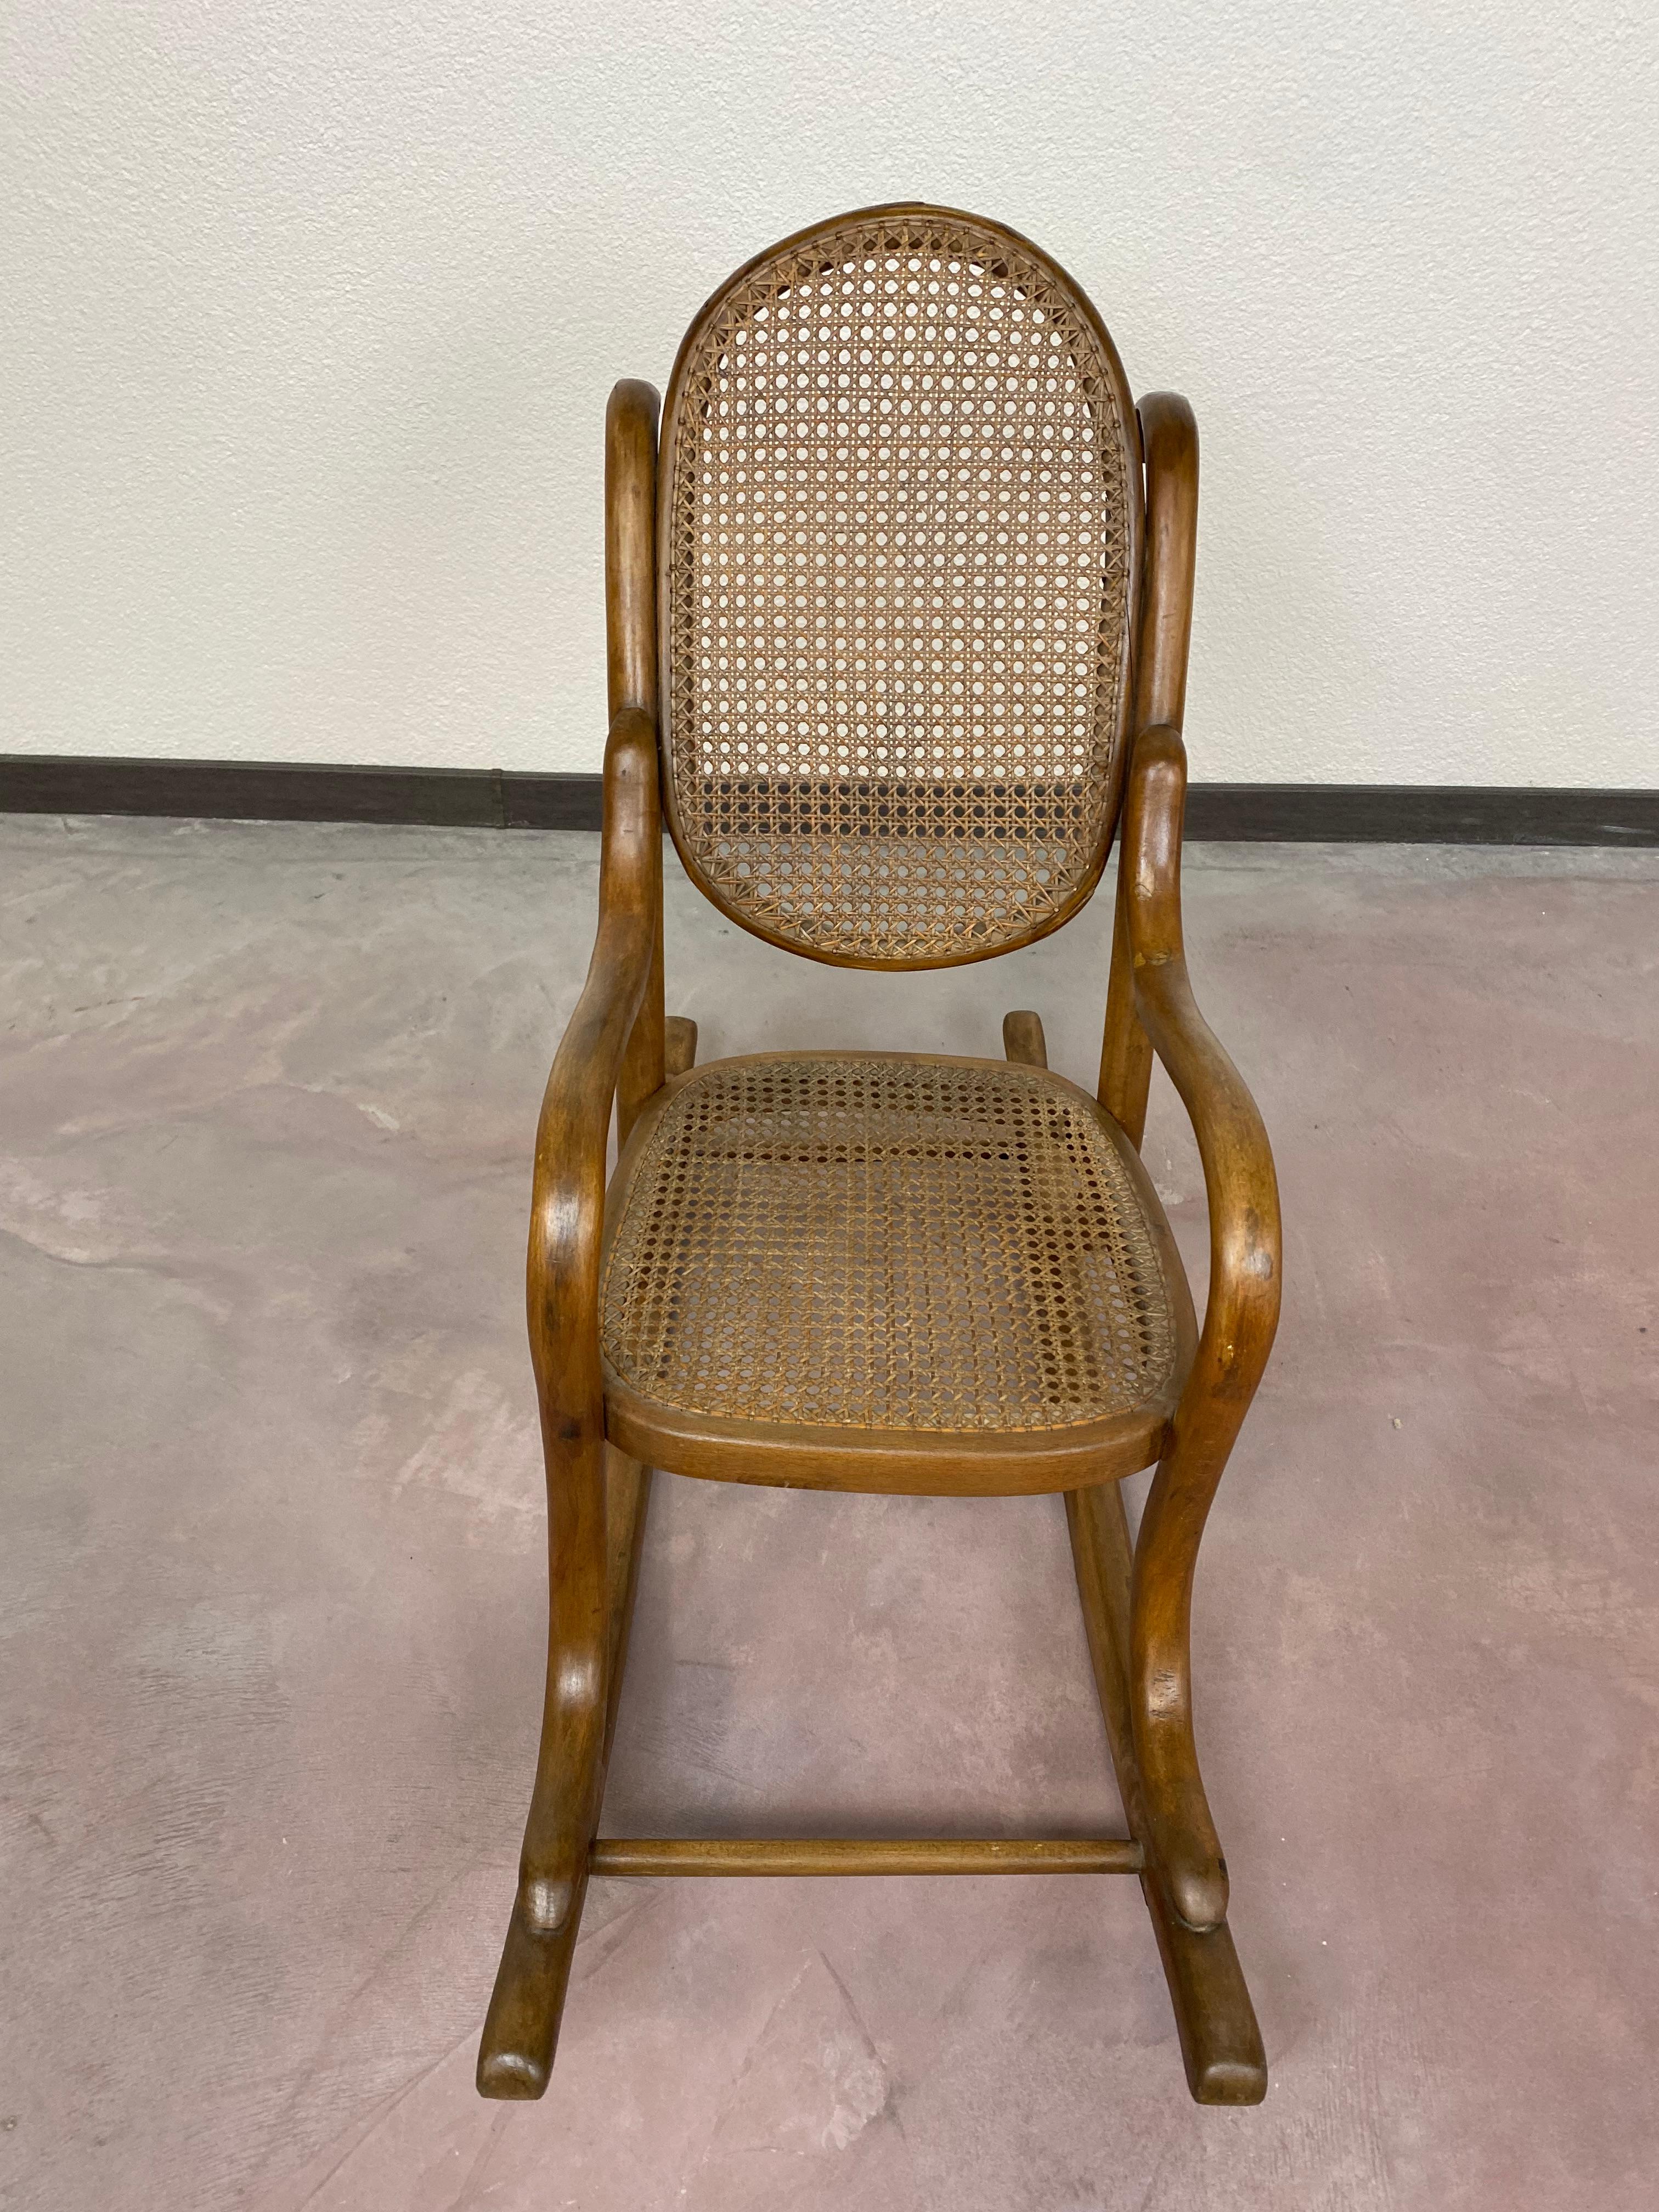 Rocking Chair for Children No.2 In Good Condition For Sale In Banská Štiavnica, SK